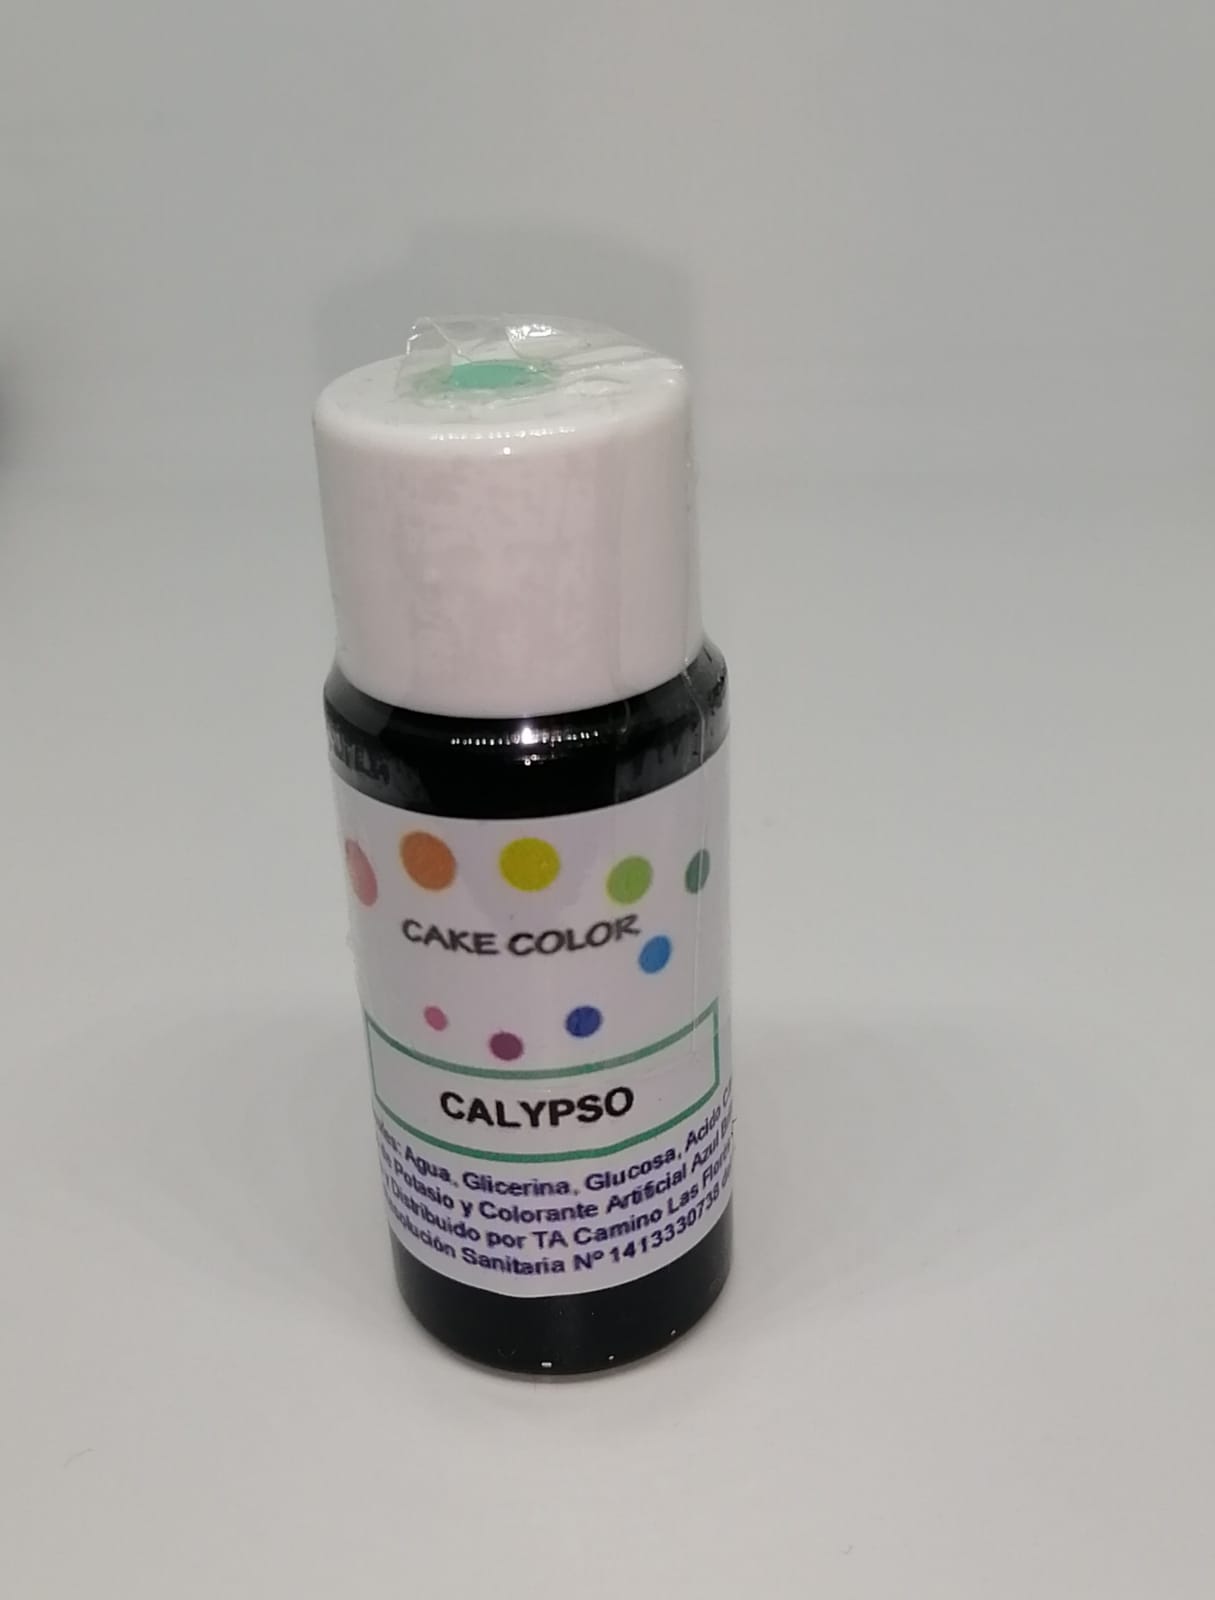 Colorante gel cake color calypso 20 gr.